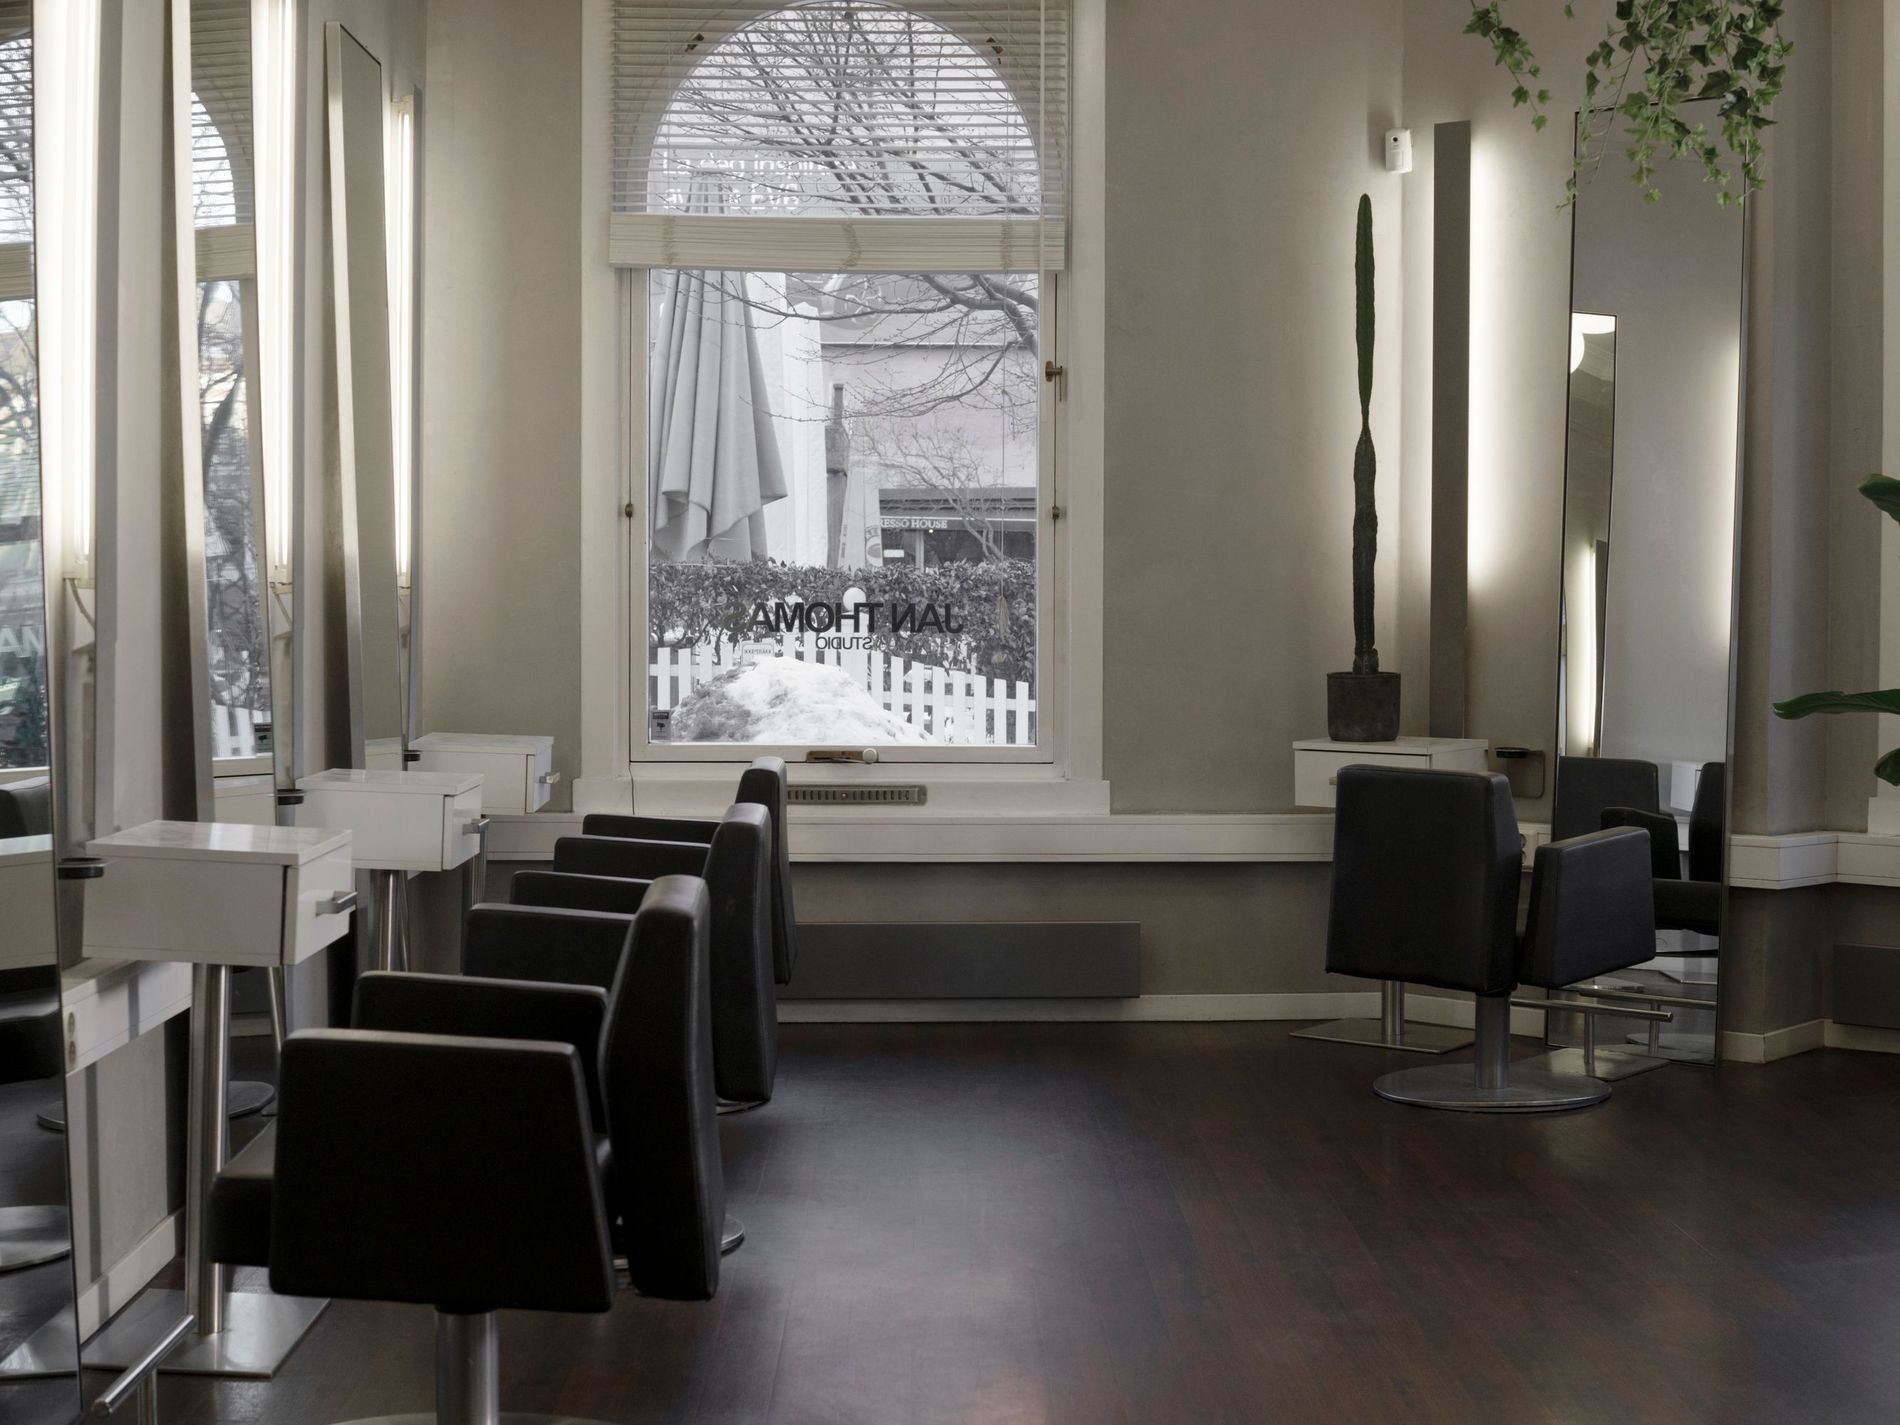 Jan Thomas Studio's hair salon is all airy windows, plants and suave interiors